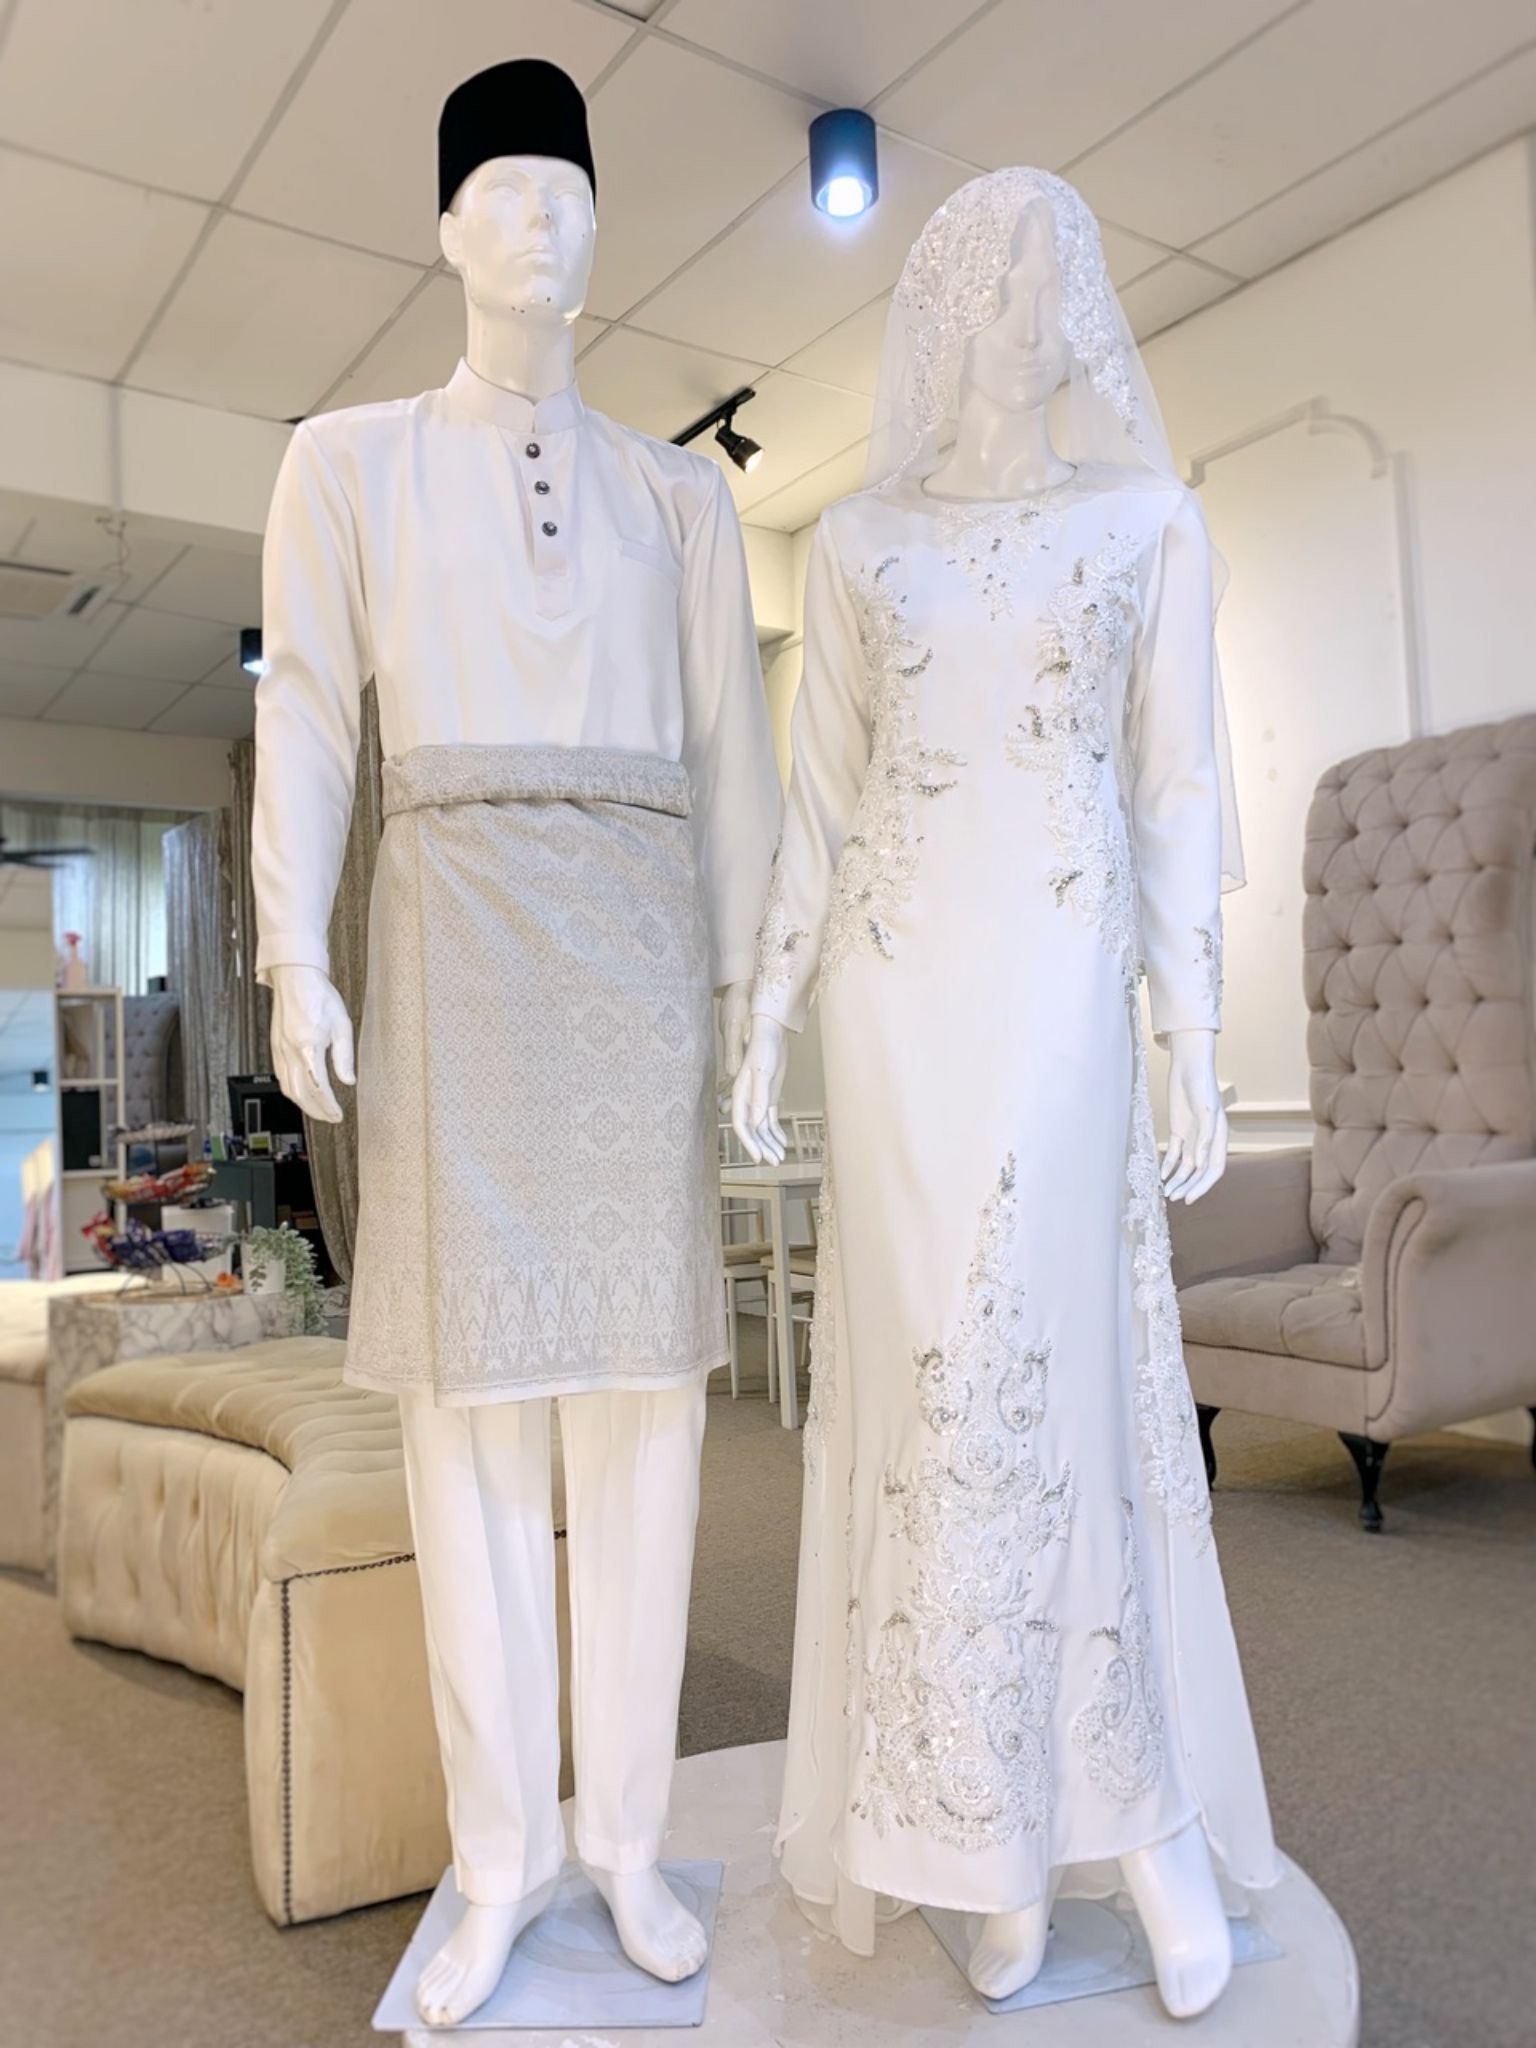 SUMAYYAH - Baju Nikah White Double-Face Loose Dress with Trail | Baju Kurung Nikah-Baju Melayu Nikah-Kebaya Nikah-Gaun Nikah-Pakaian Nikah-Sewa Baju Nikah-Beli Baju Nikah-Baju Nikah Online-Baju Nikah Malaysia-Baju Nikah Muslim-Baju Nikah Tradisional-Baju Nikah Moden-Baju Nikah Johor